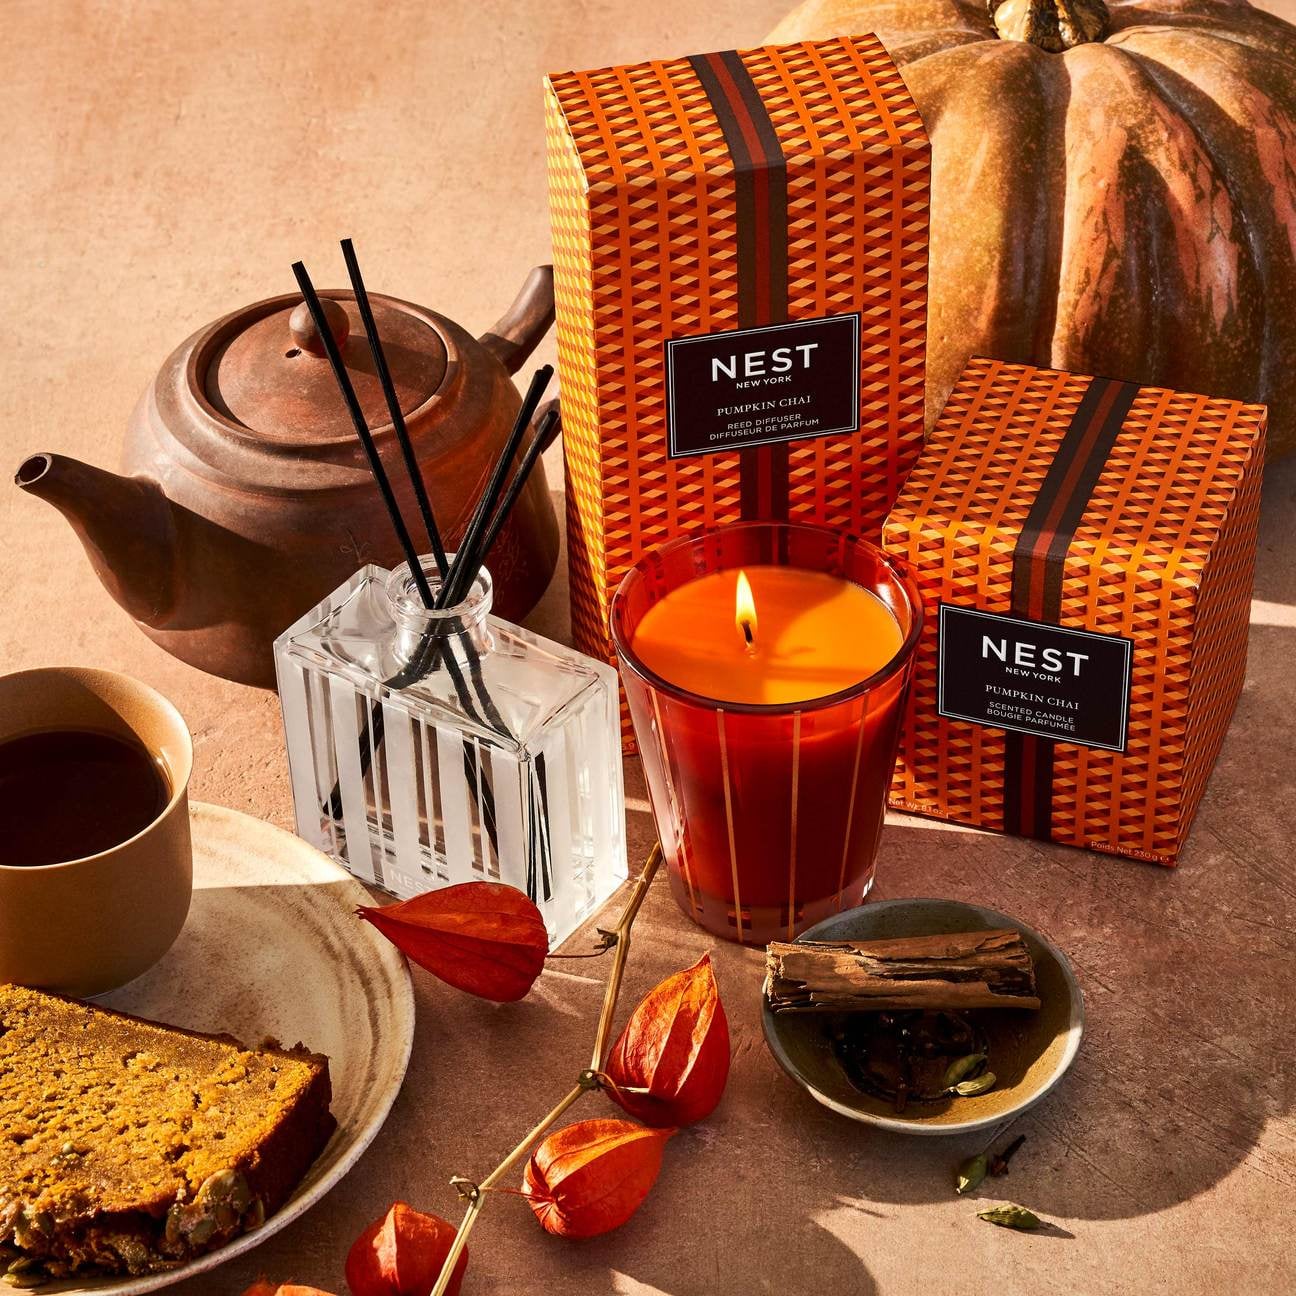 Pumpkin Spice Wax Melts - Threshold™ : Target